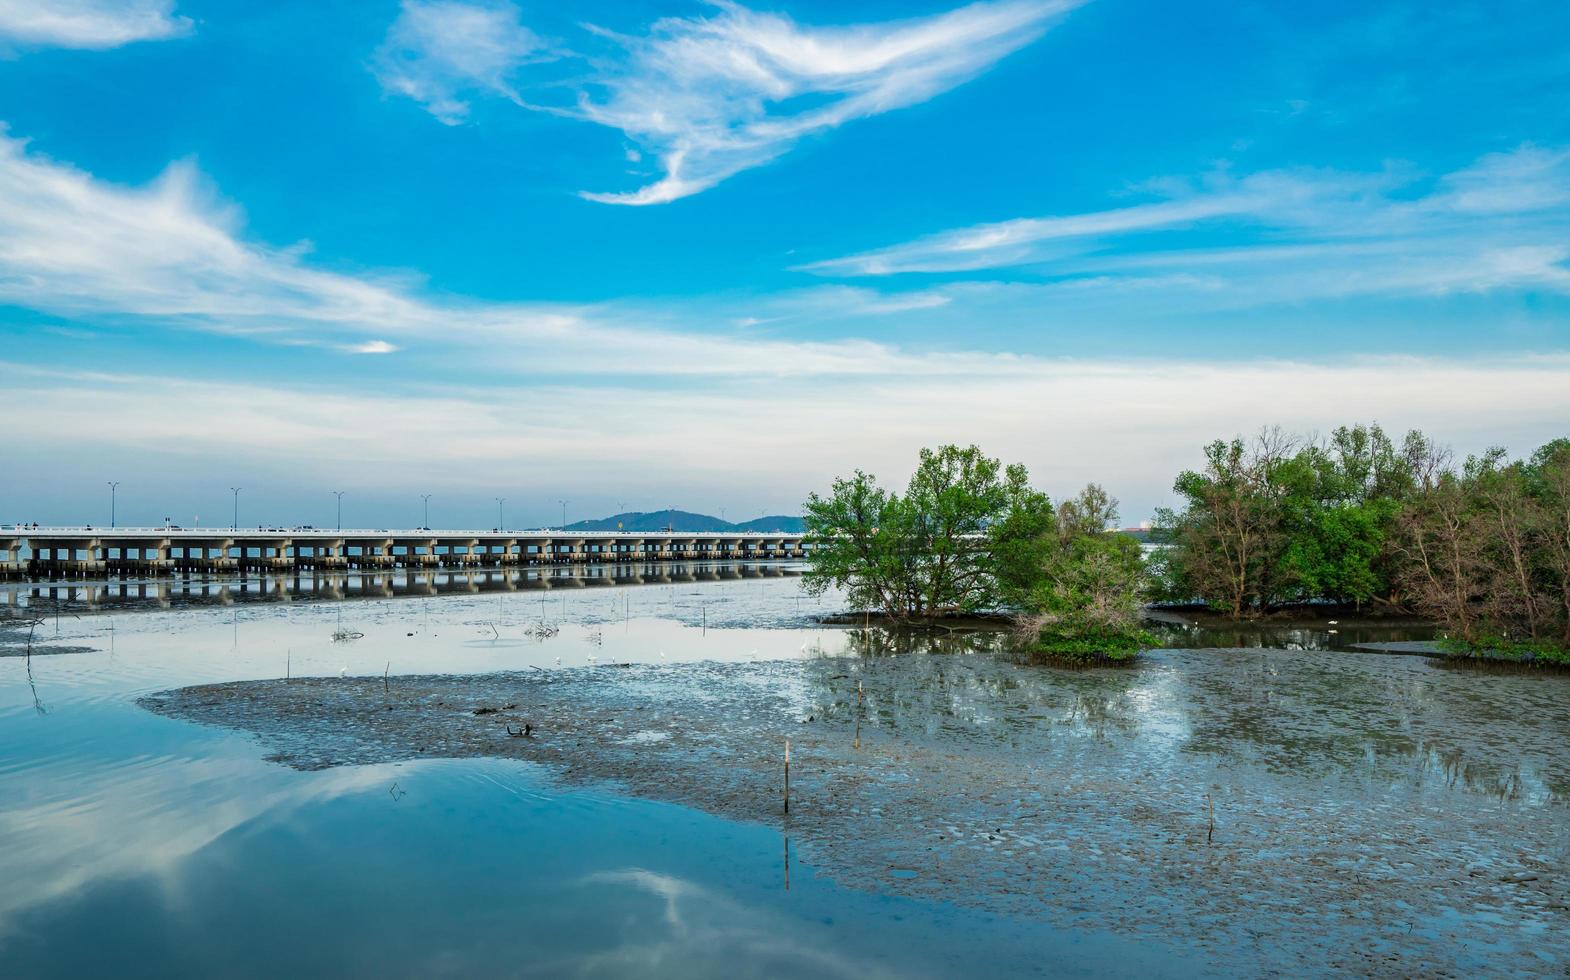 mangrovebos, betonnen brug en prachtige blauwe lucht en wolken. foto